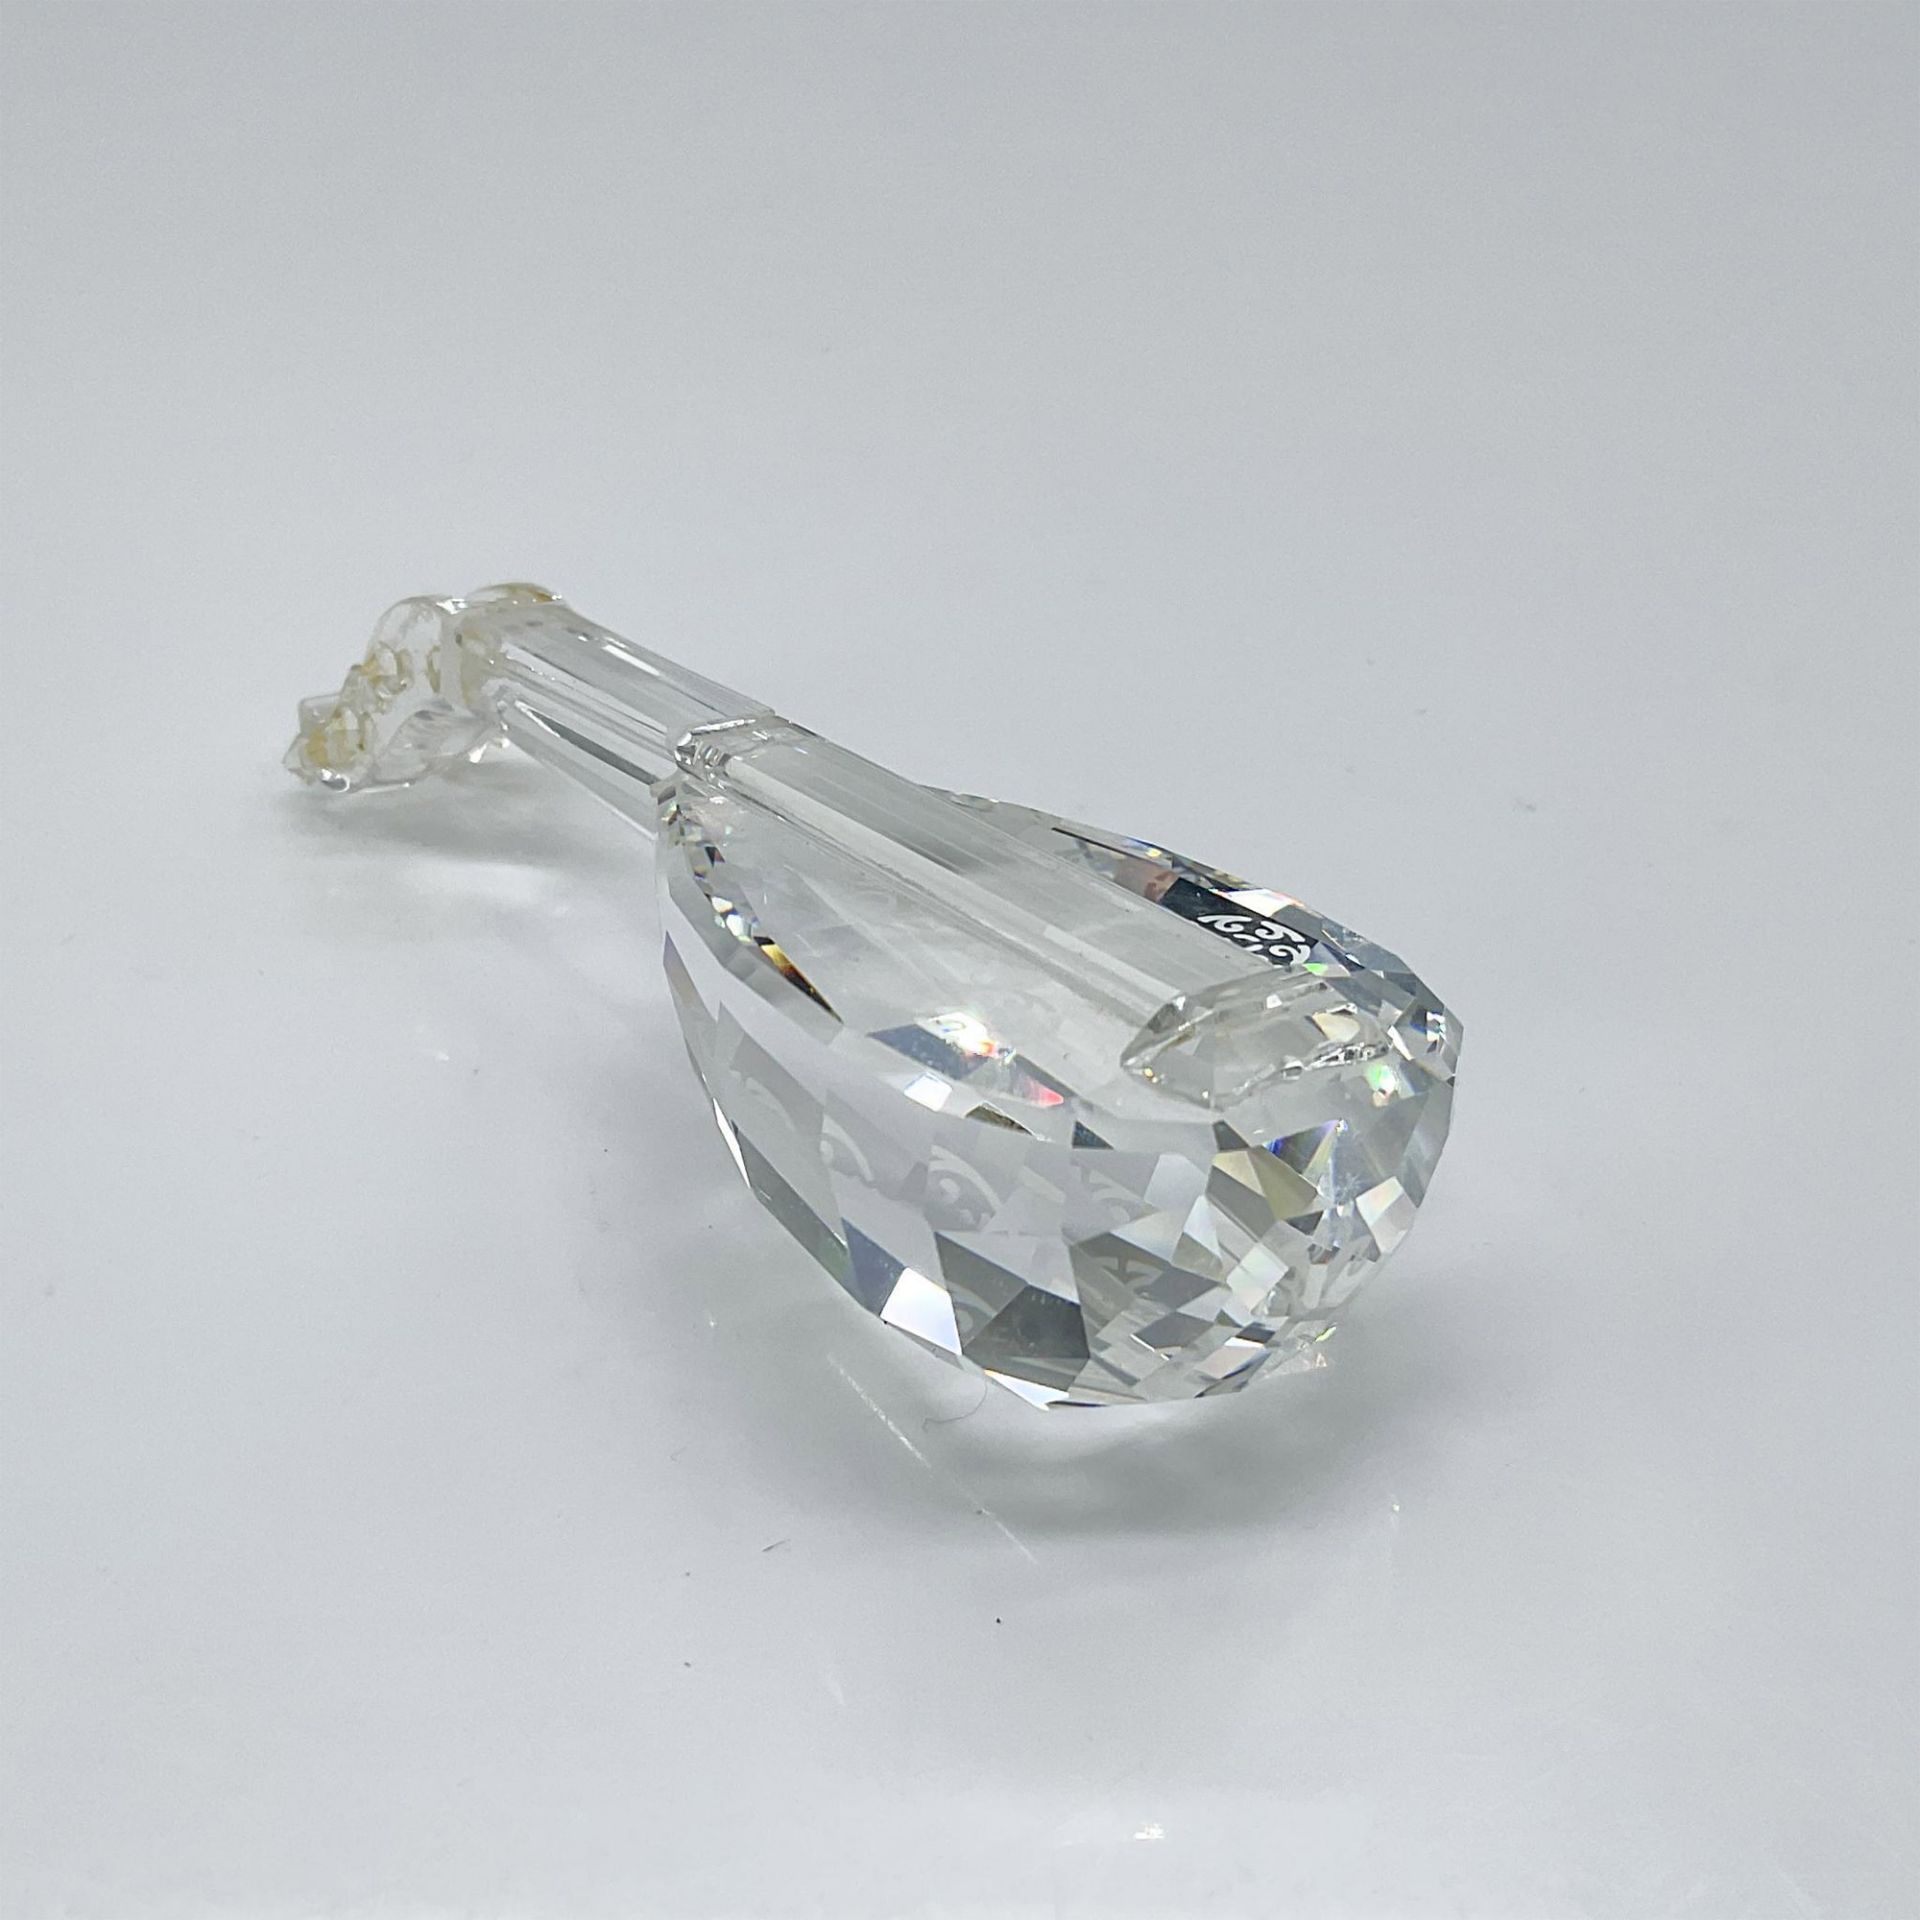 Swarovski Crystal Figurine, Guitar - Image 3 of 4